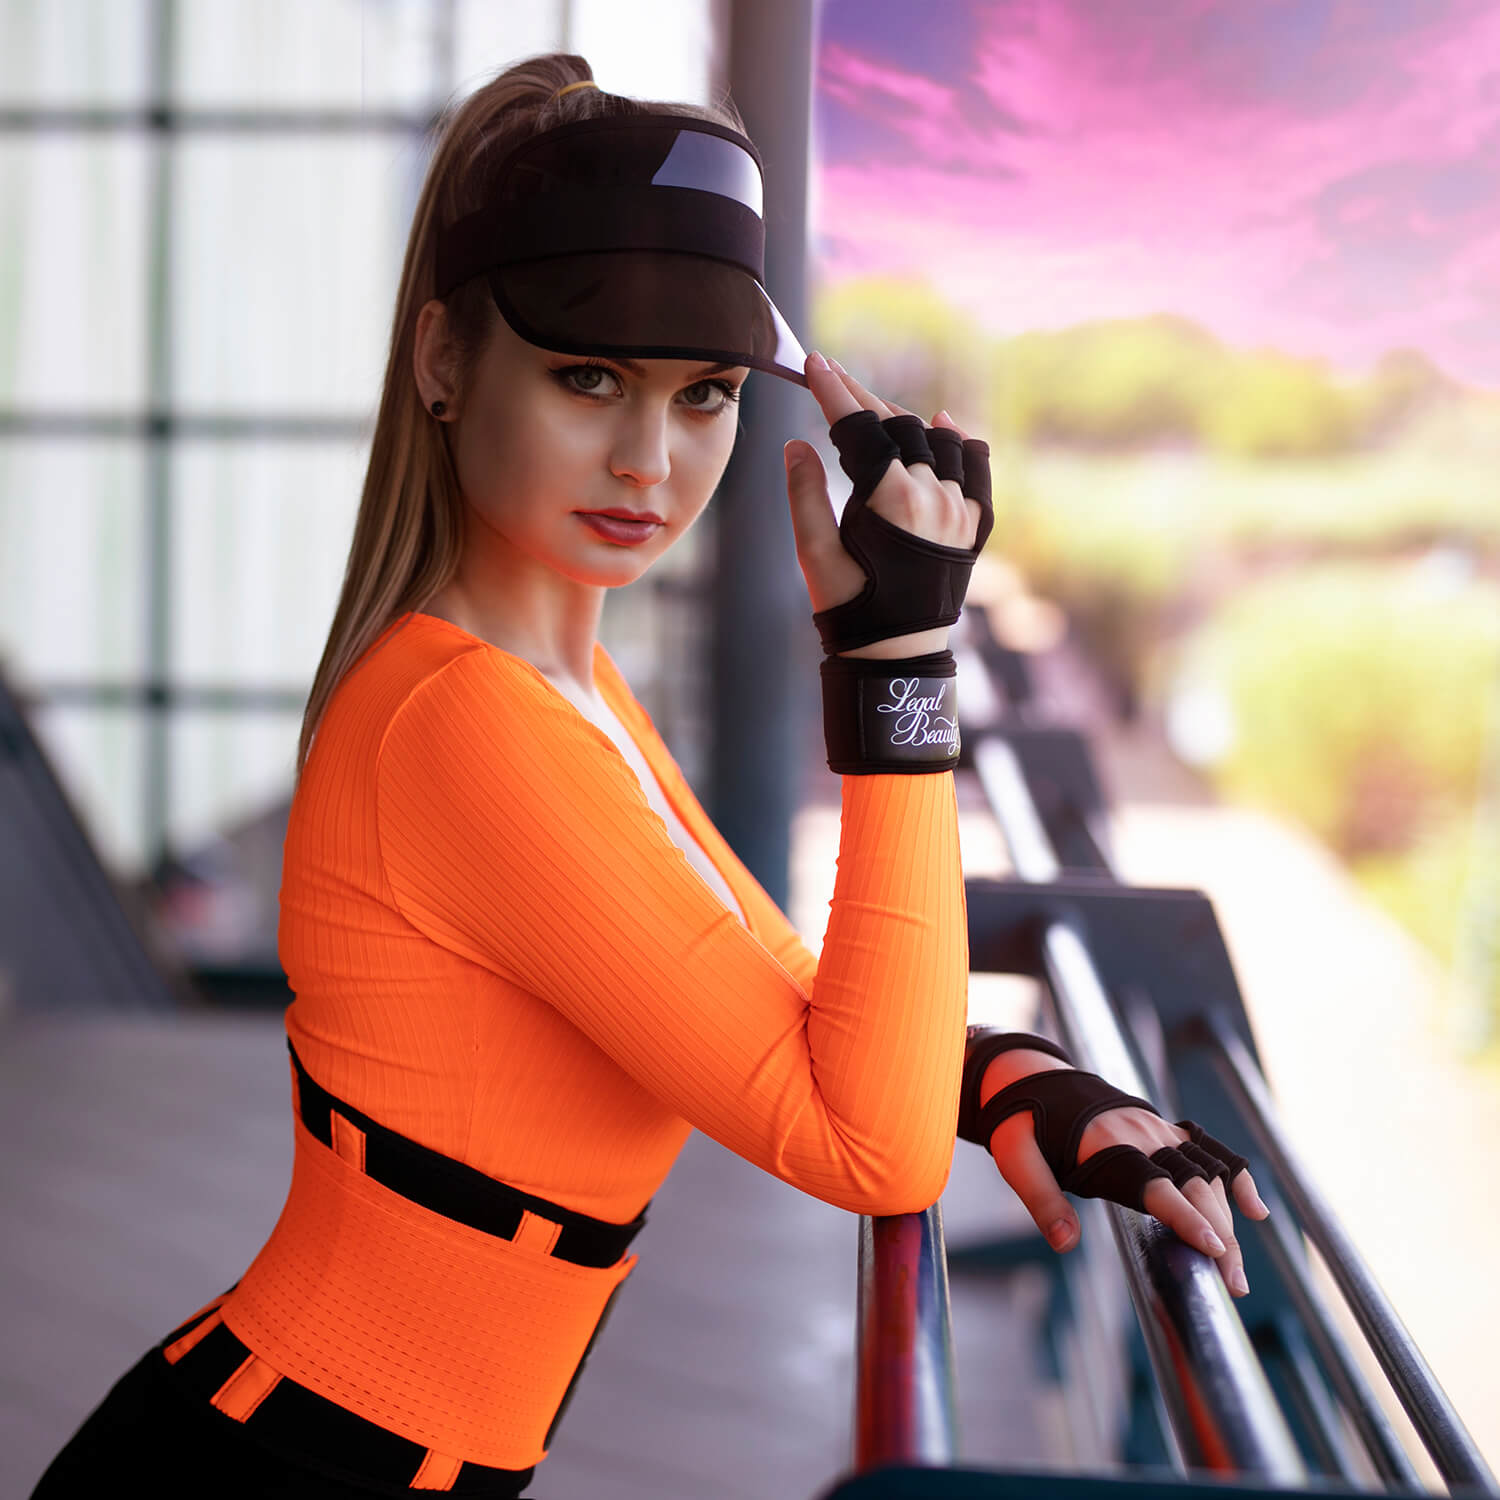 London - Sports Belt with Extra Waistband - Neon orange - L